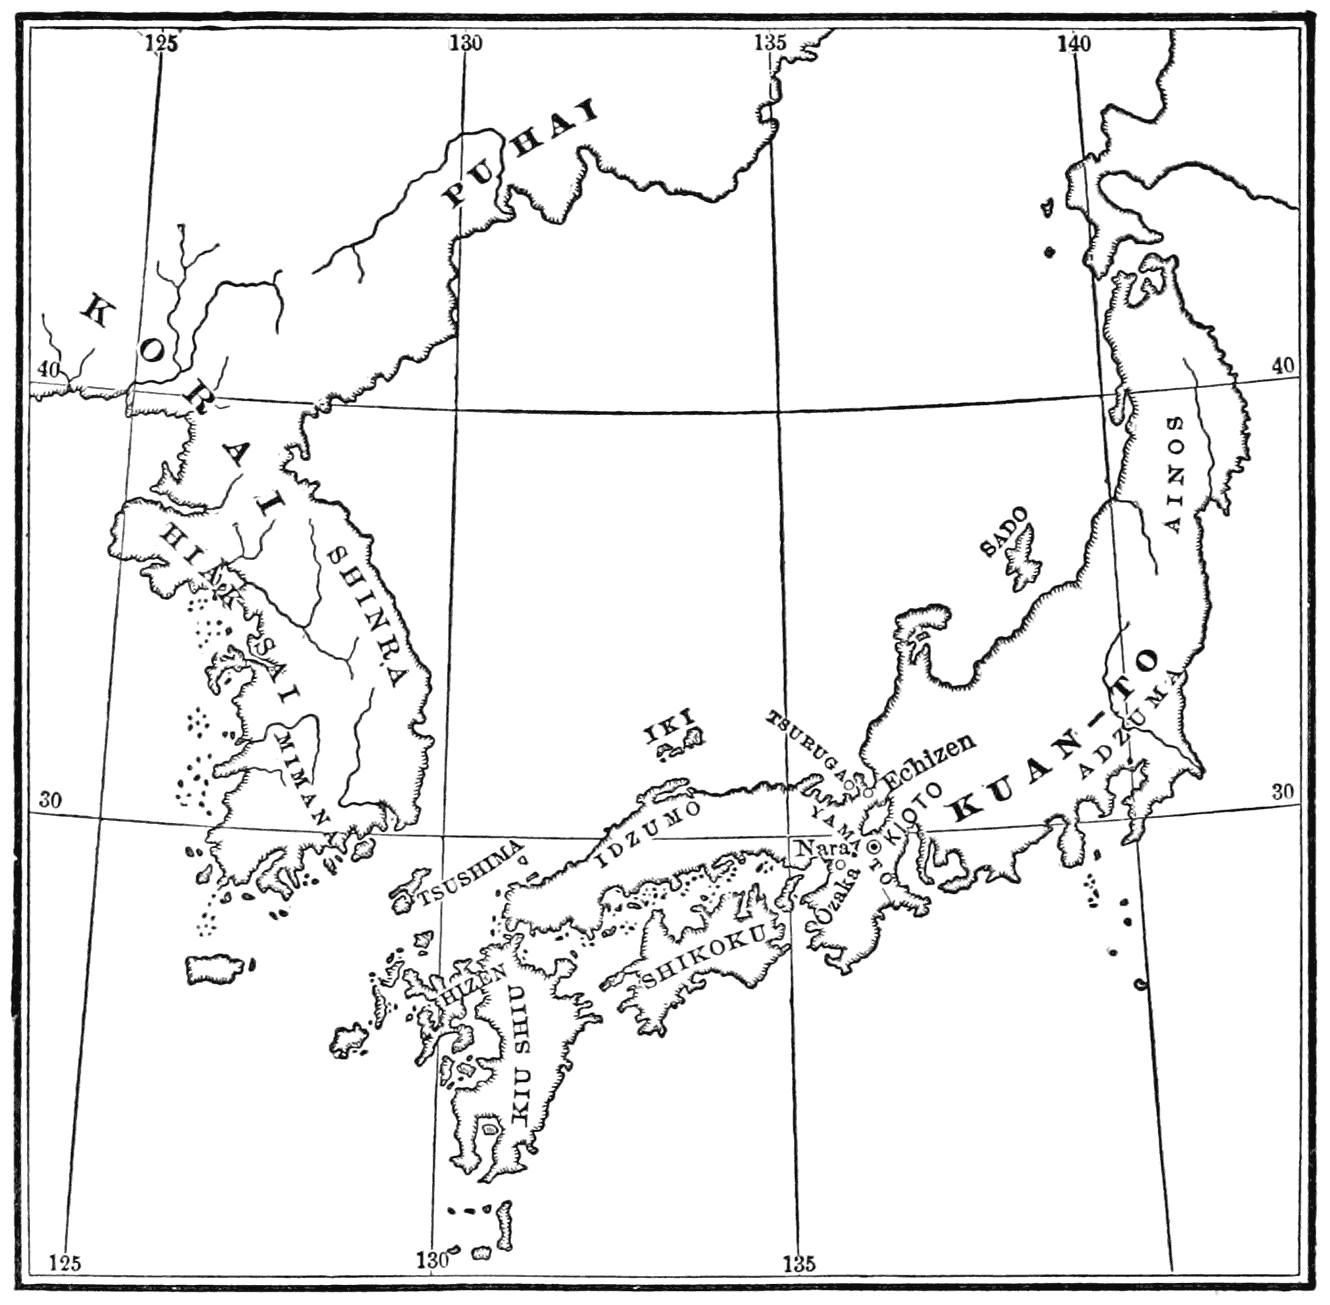 Corea, the hermit nation